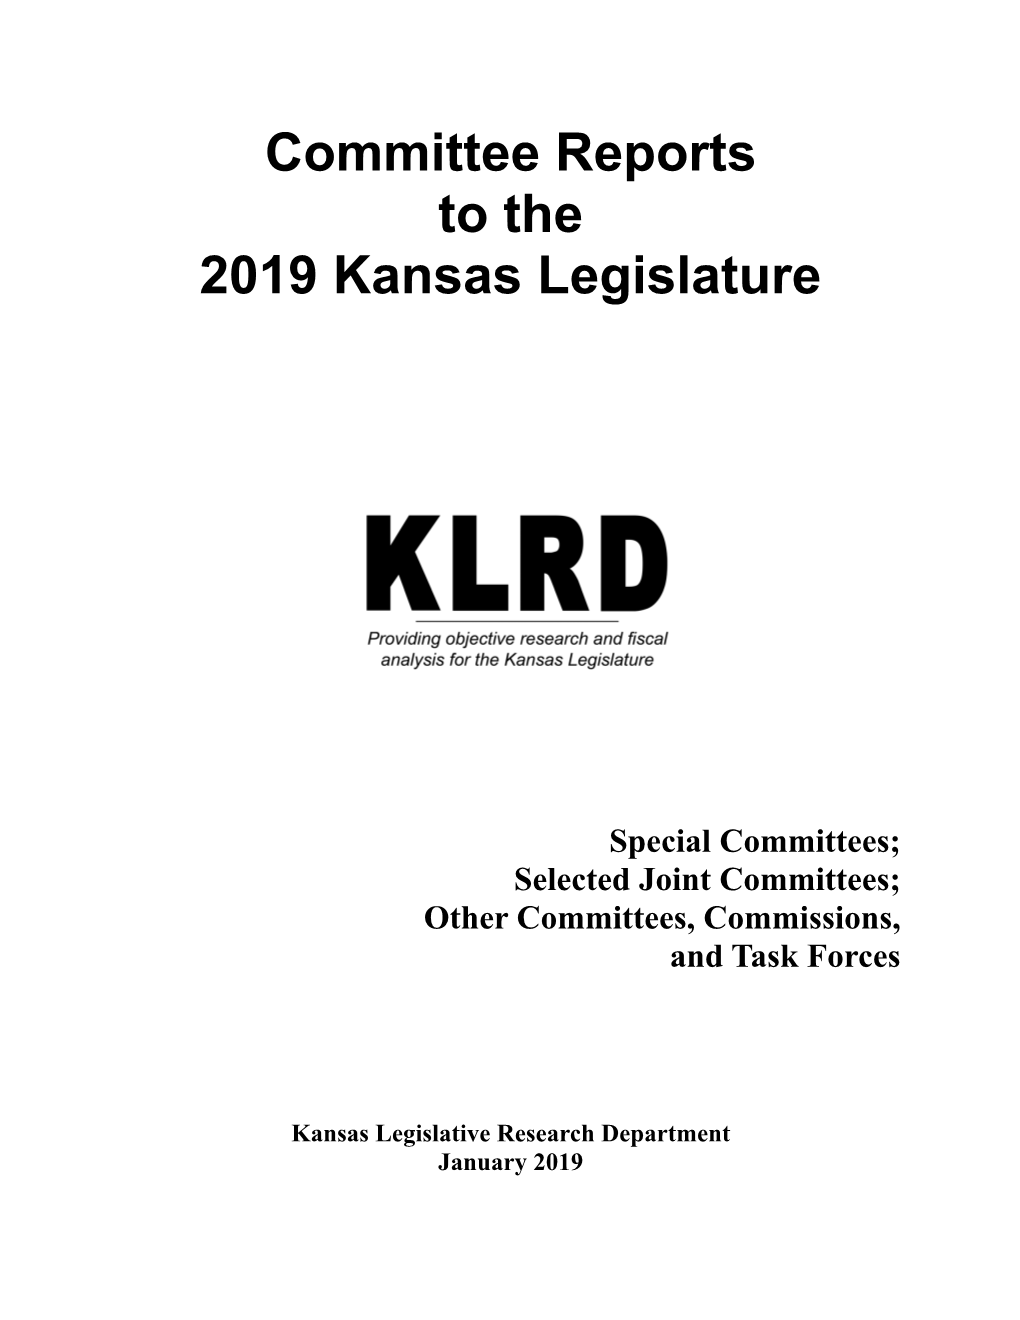 Committee Reports to the 2019 Kansas Legislature